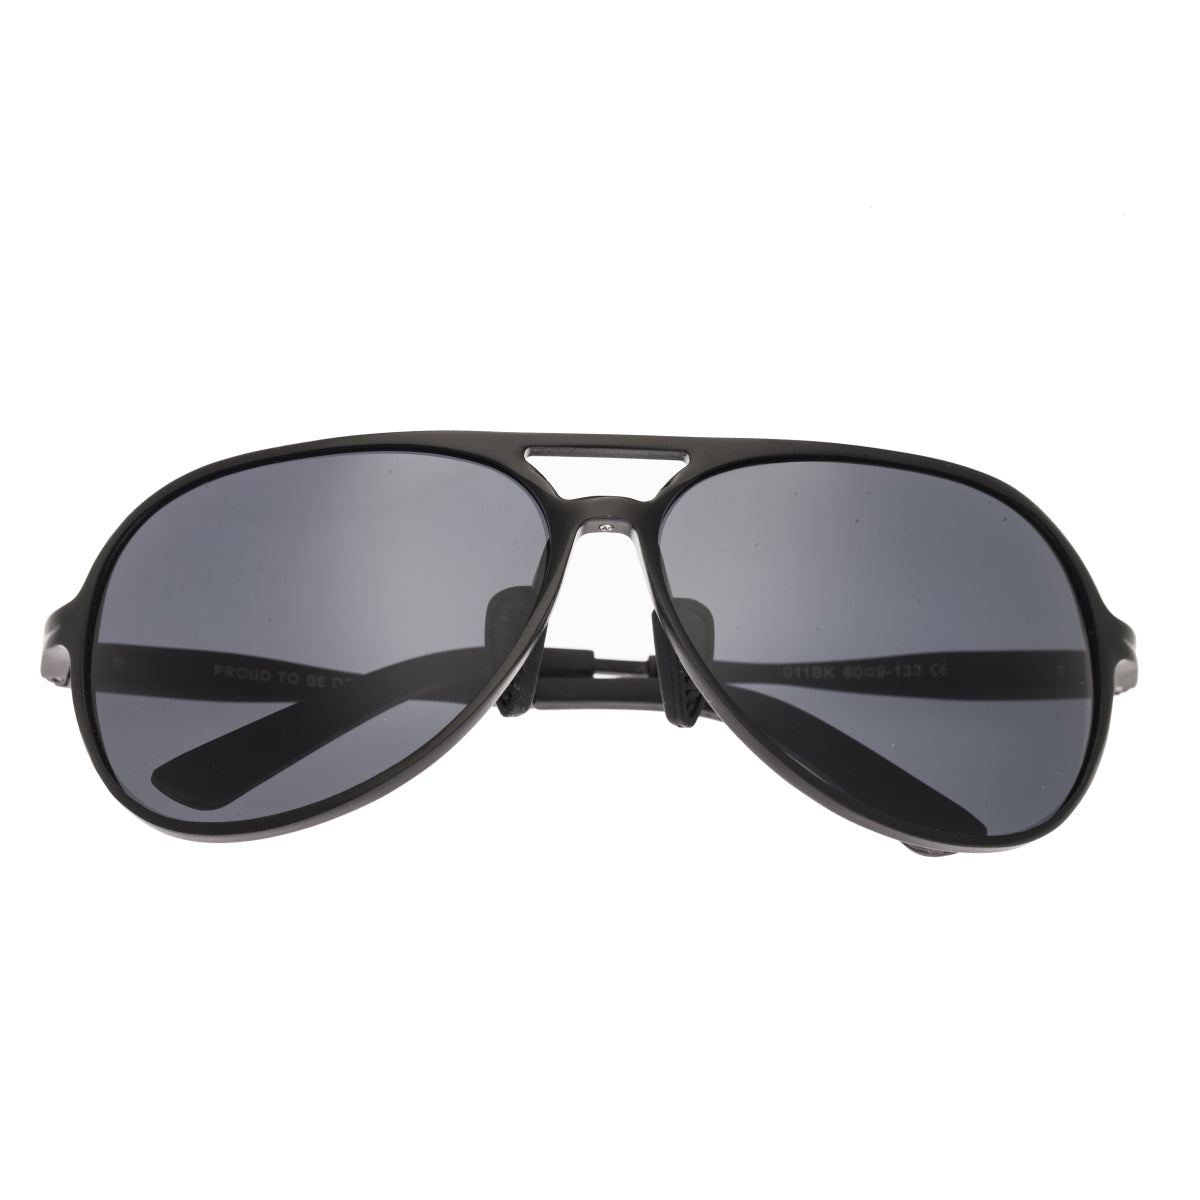 Breed Earhart Aluminium Polarized Sunglasses - Black/Black - BSG011BK